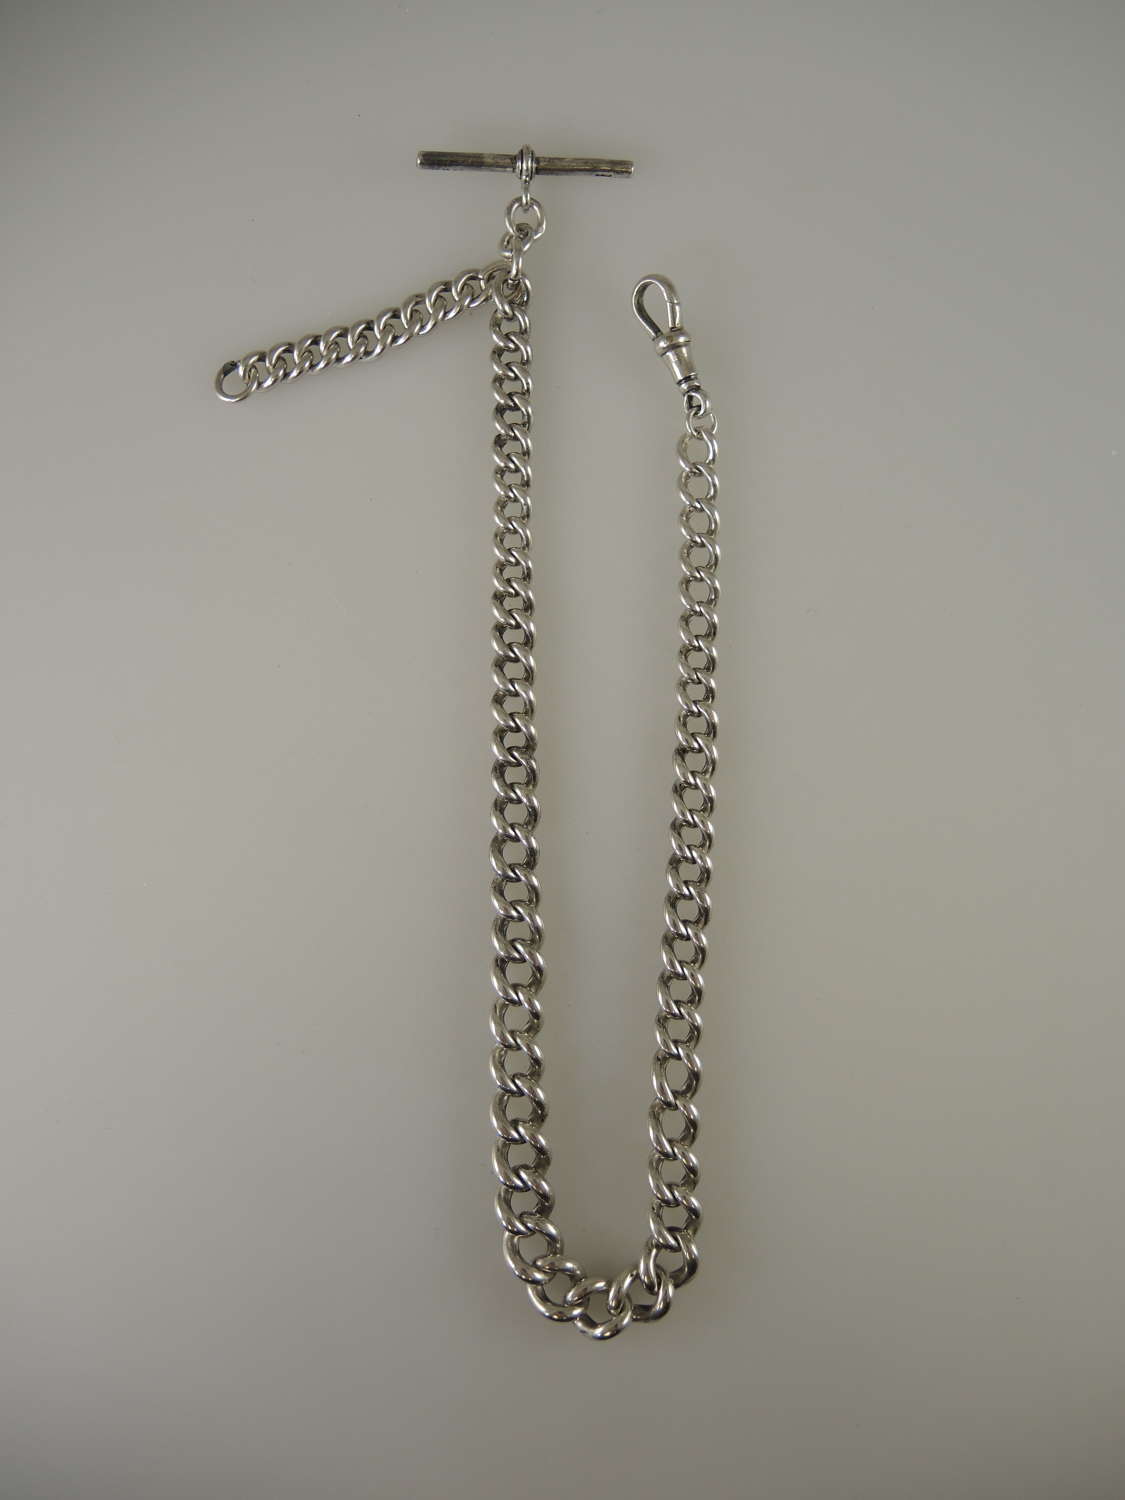 English silver pocket watch chain 1902